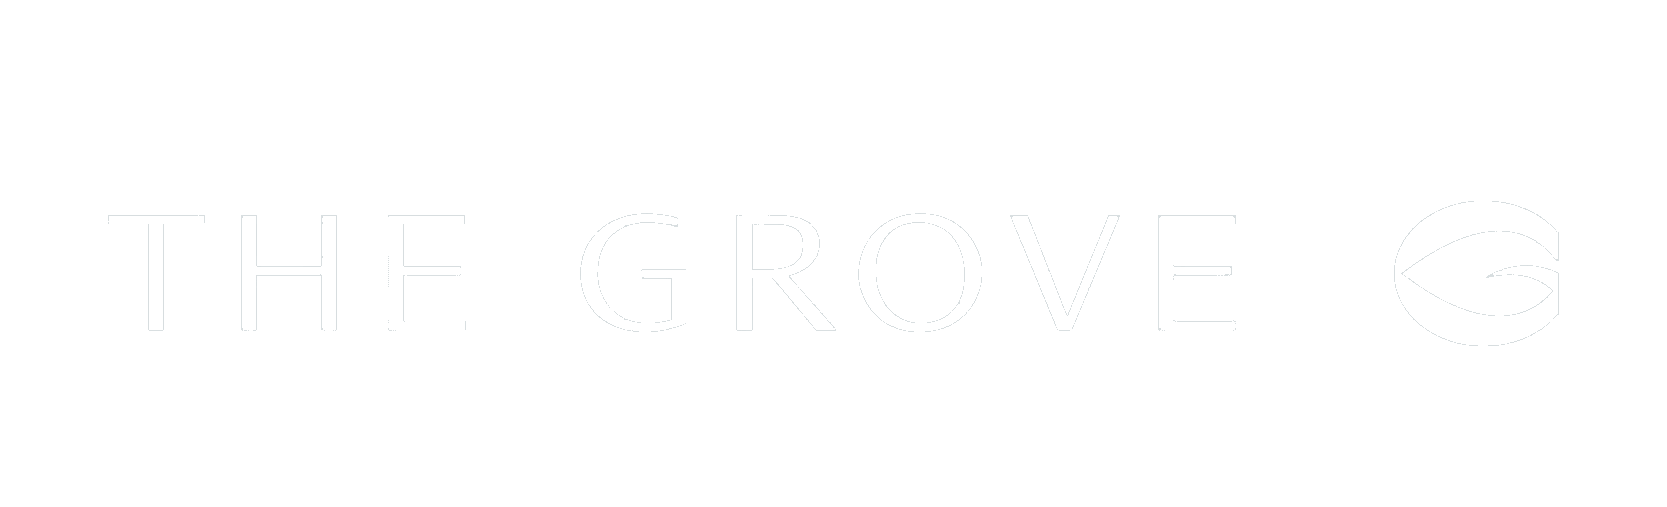 The grove logo